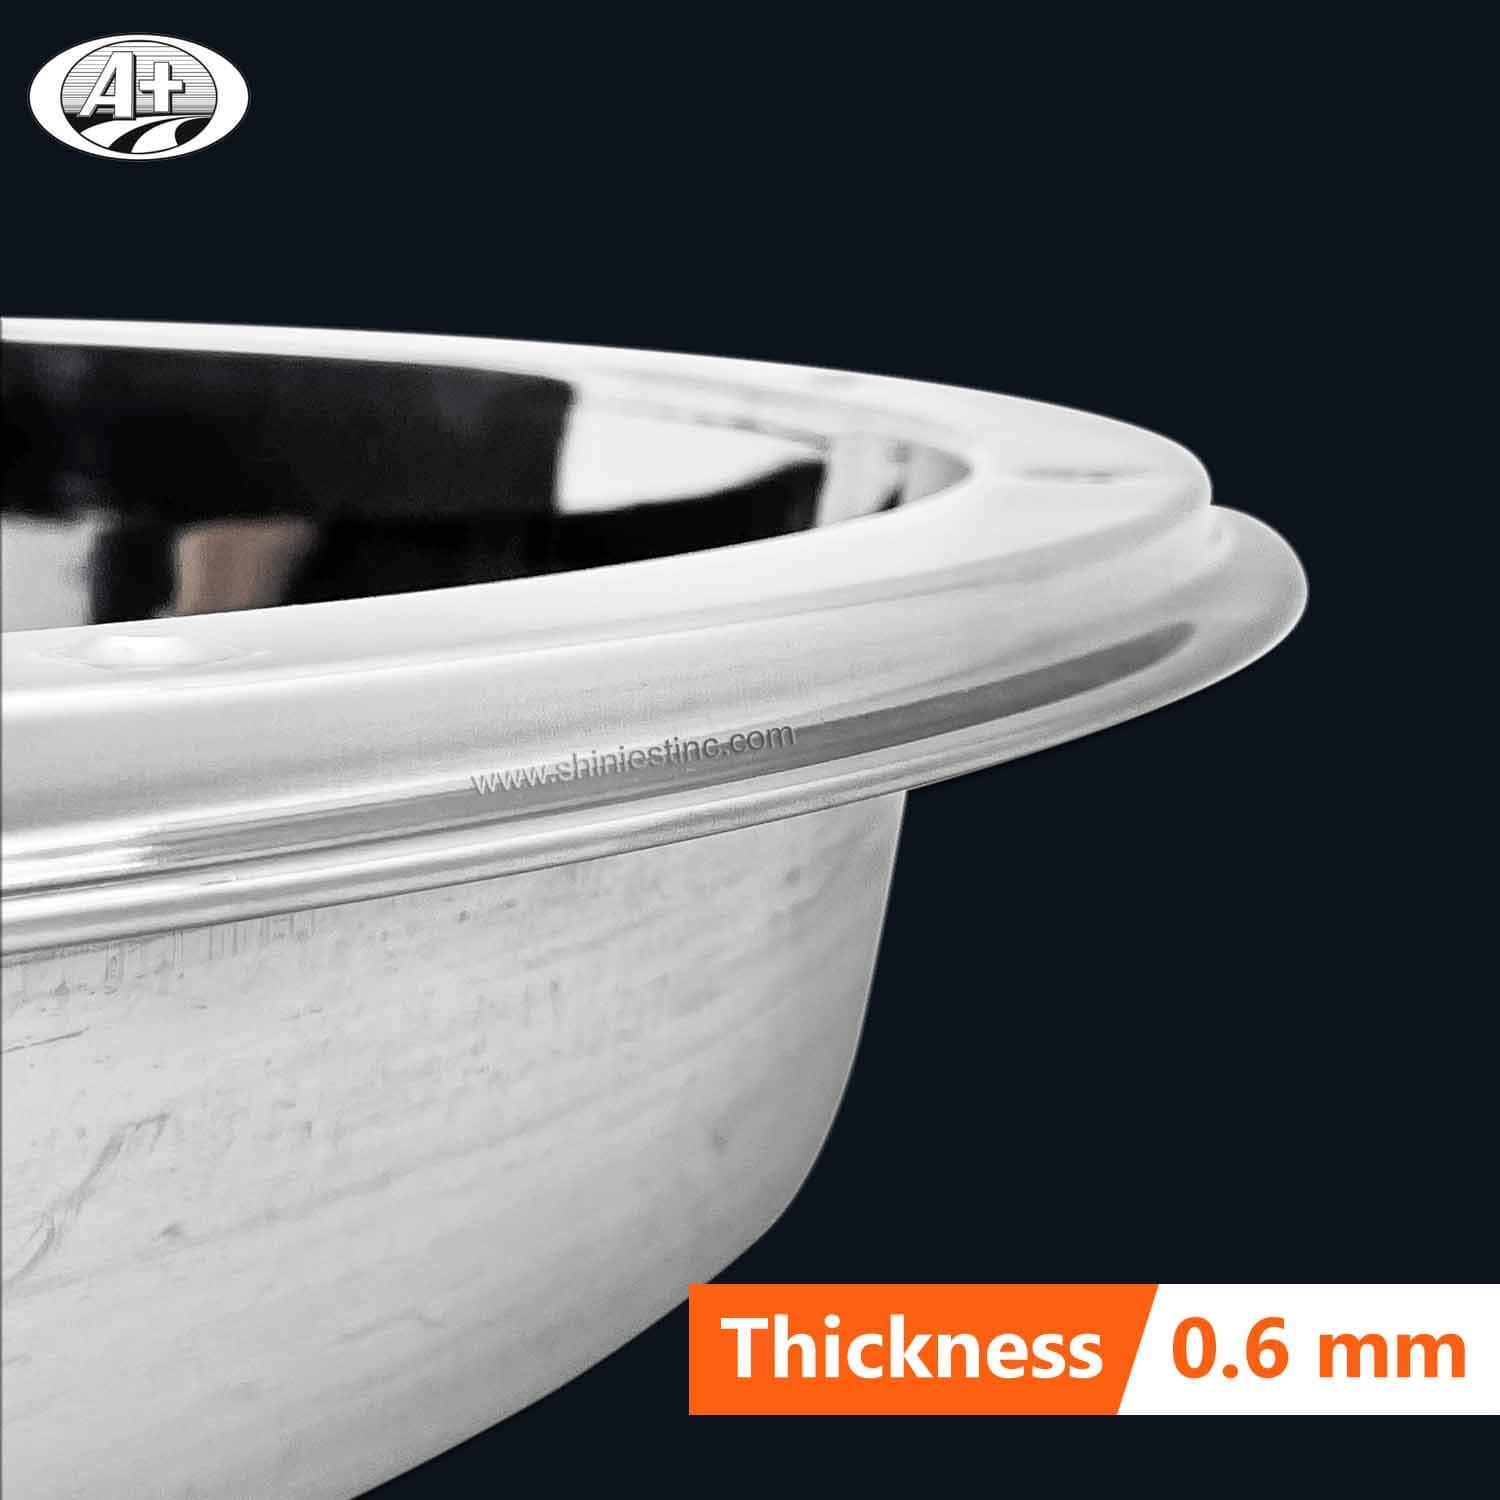 (30195R-82) 19.5＂T304 Stainless Steel Wheel Trim Ring for Rear Wheel (82mm Depth)